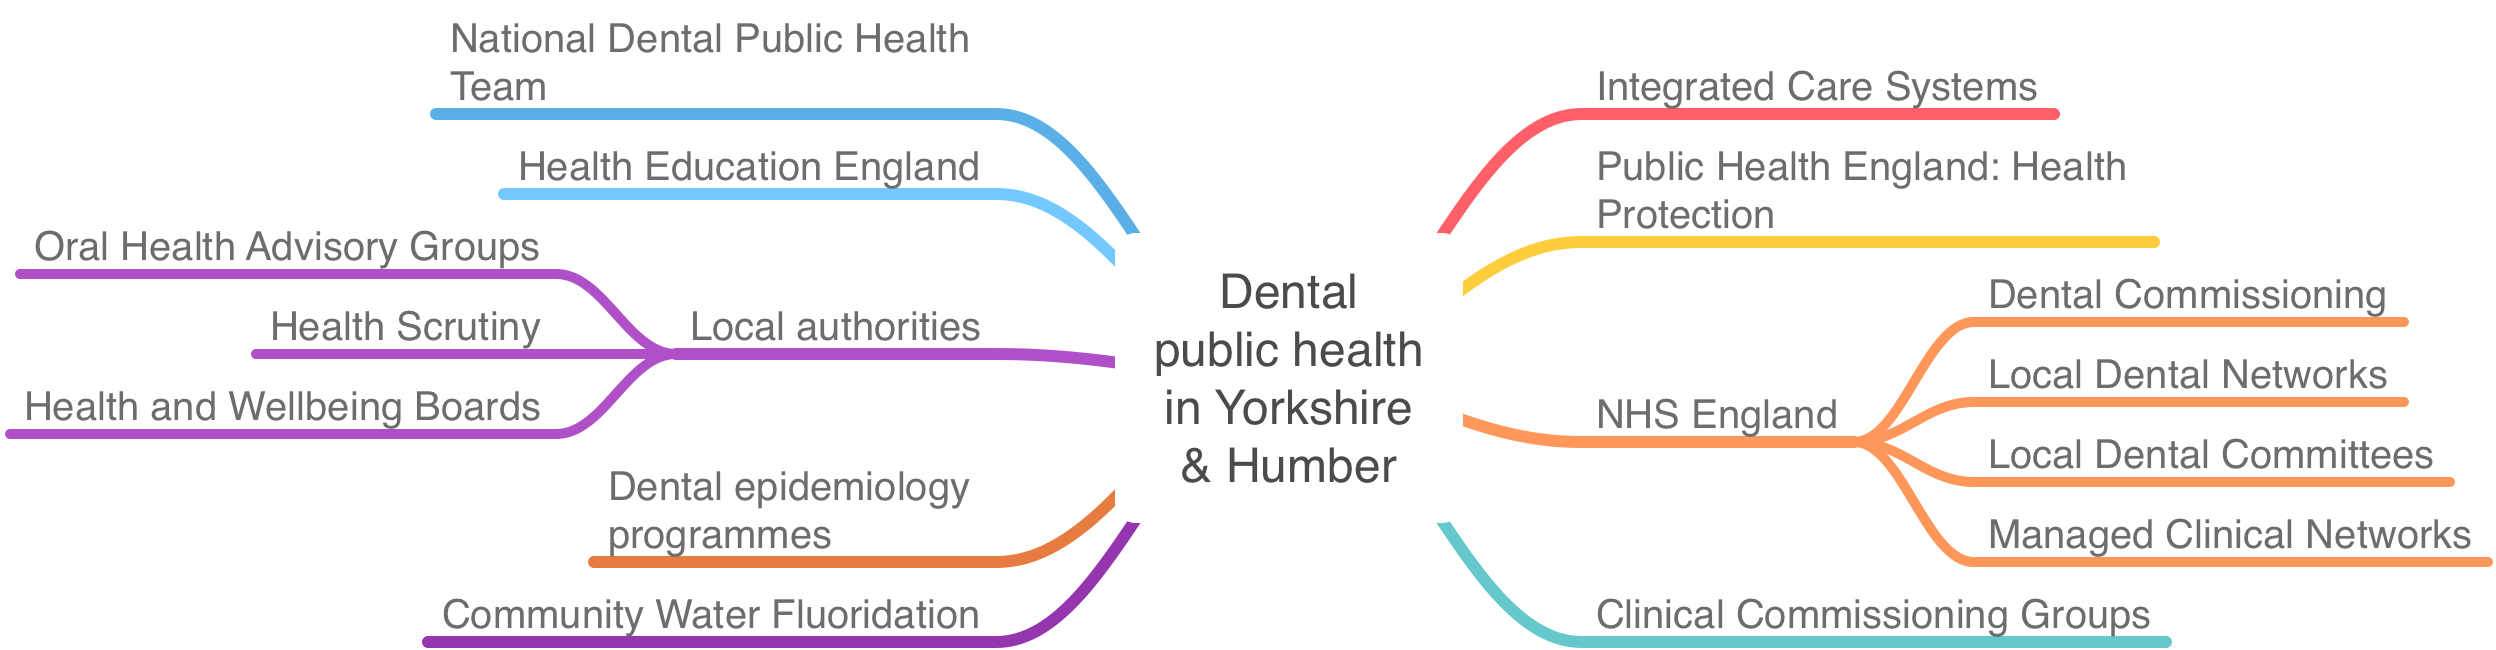 dental_public_health_network_in_yh.png